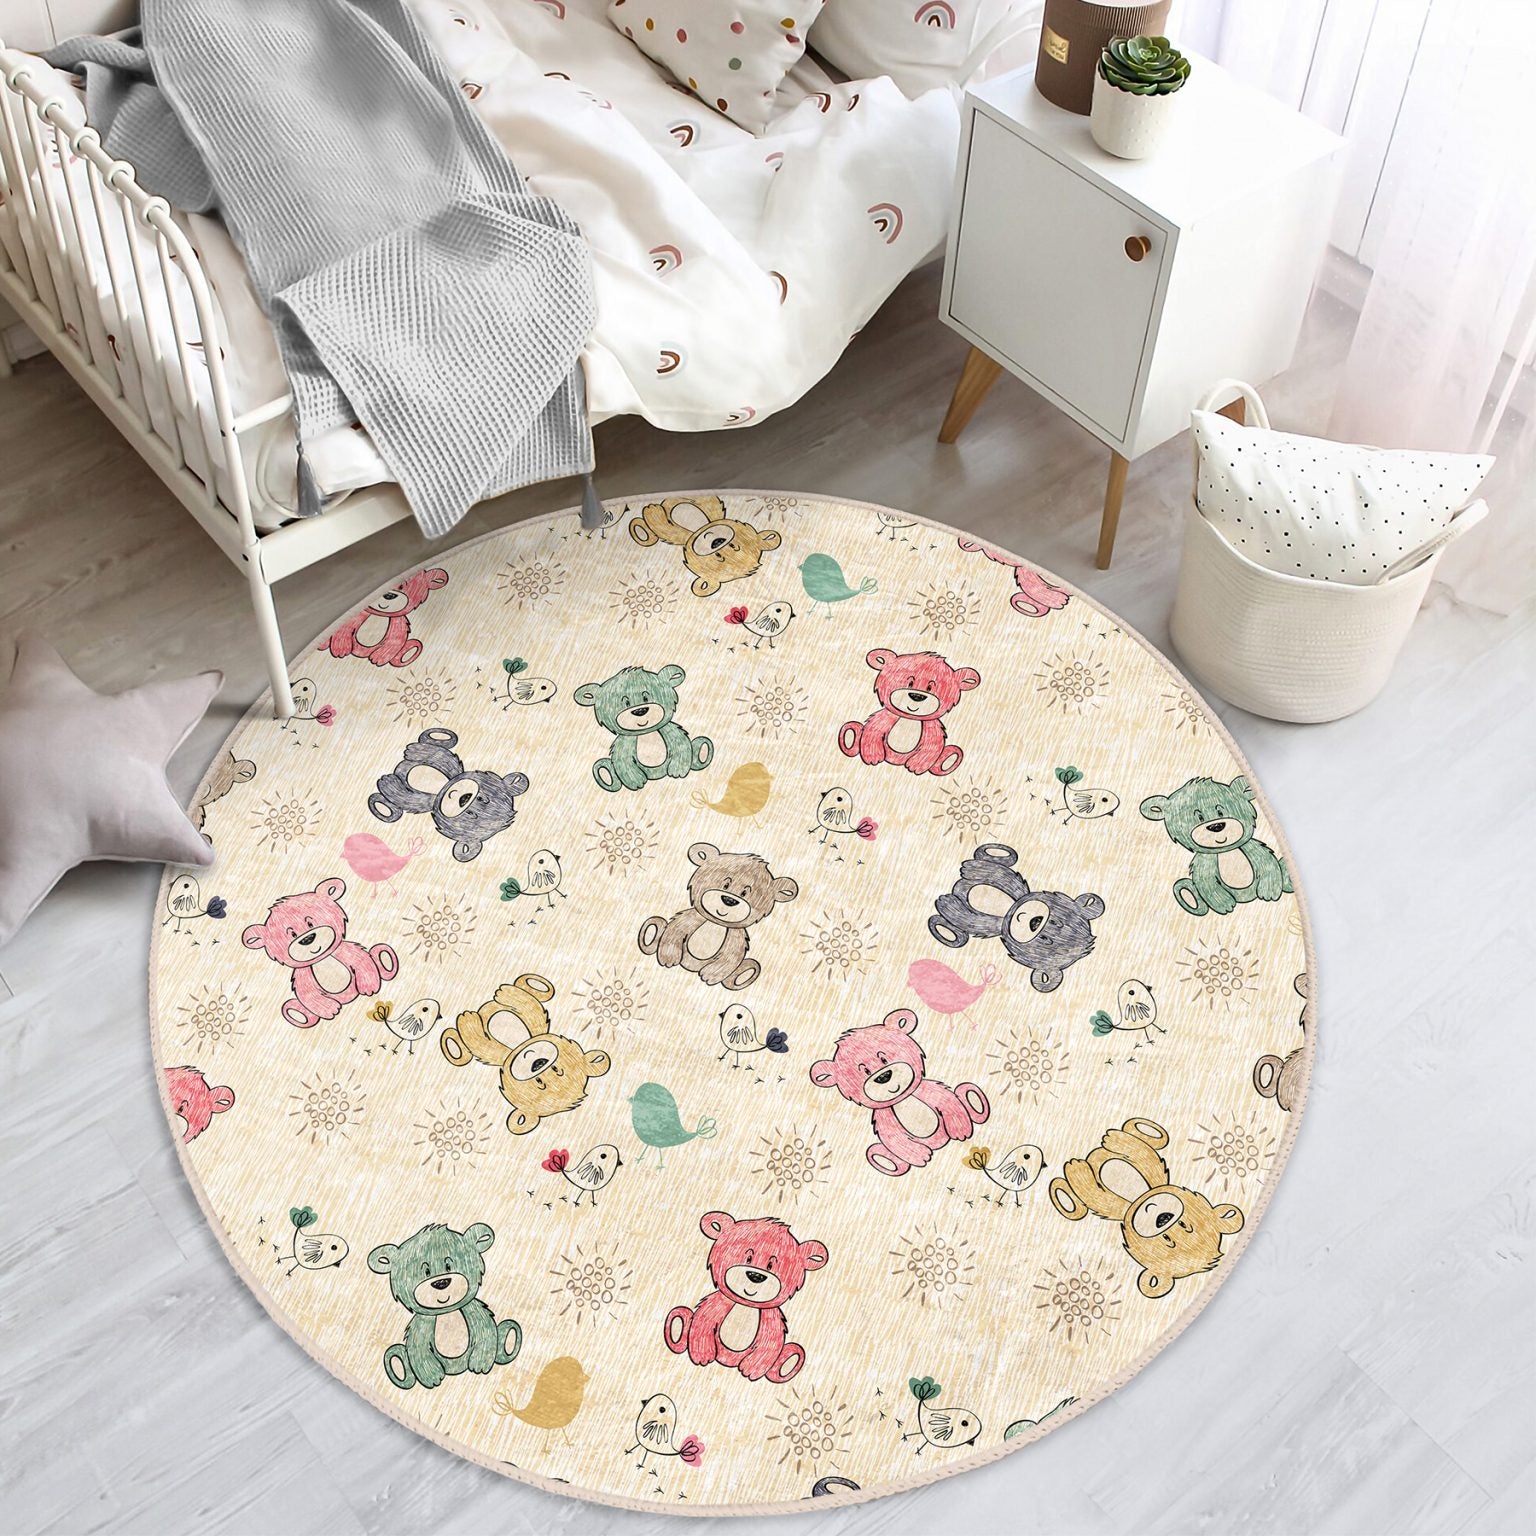 Homeezone's Colorful Teddy Bears Baby Room Floor Mat